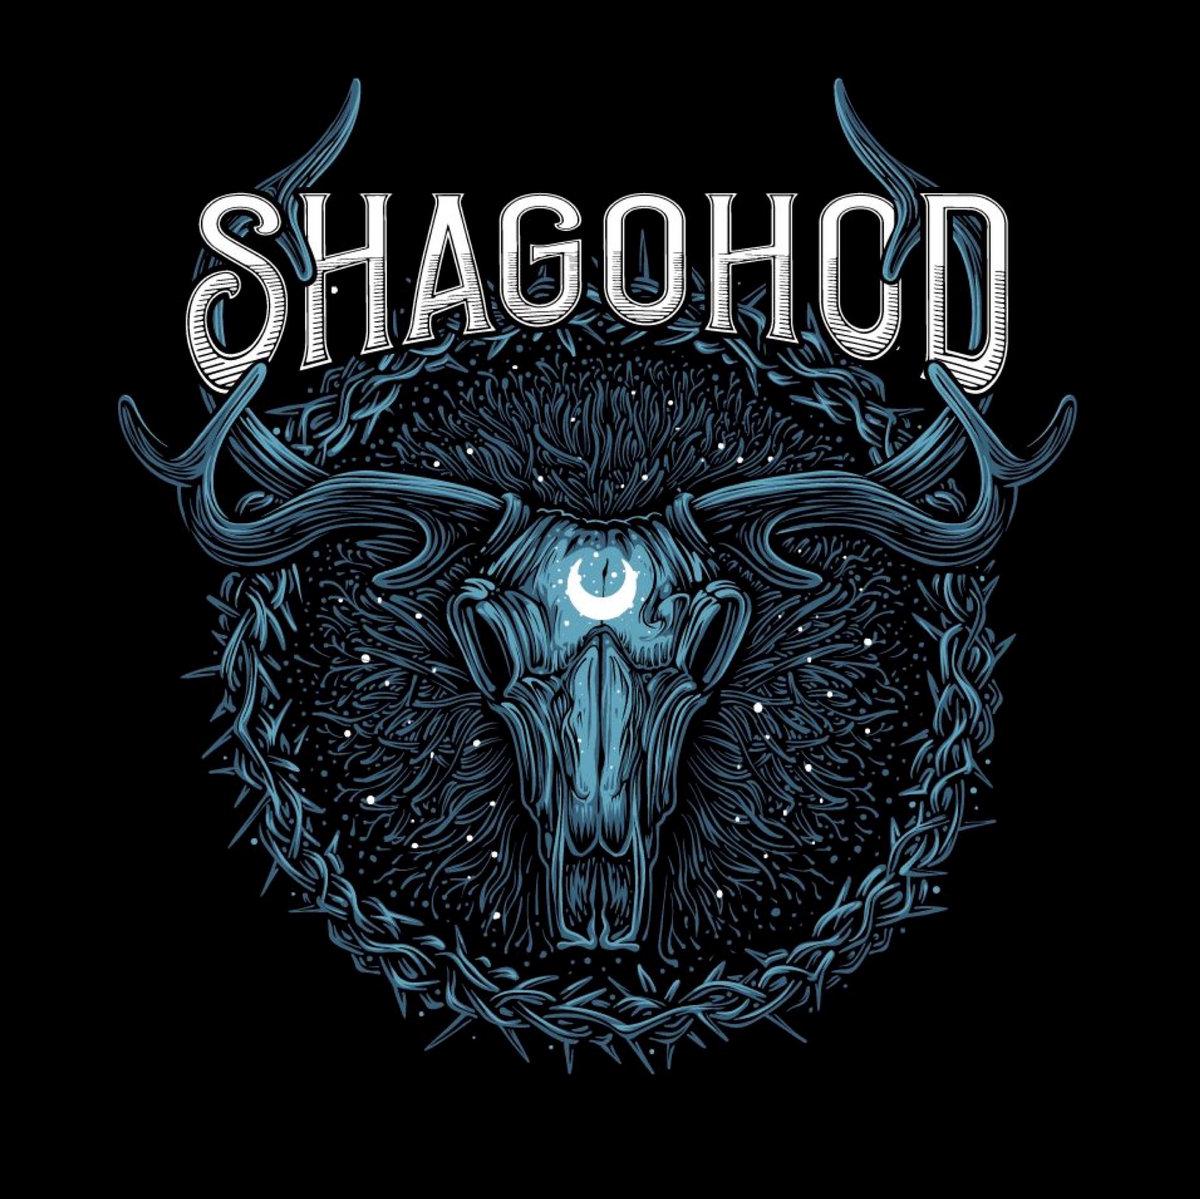 Shagohod